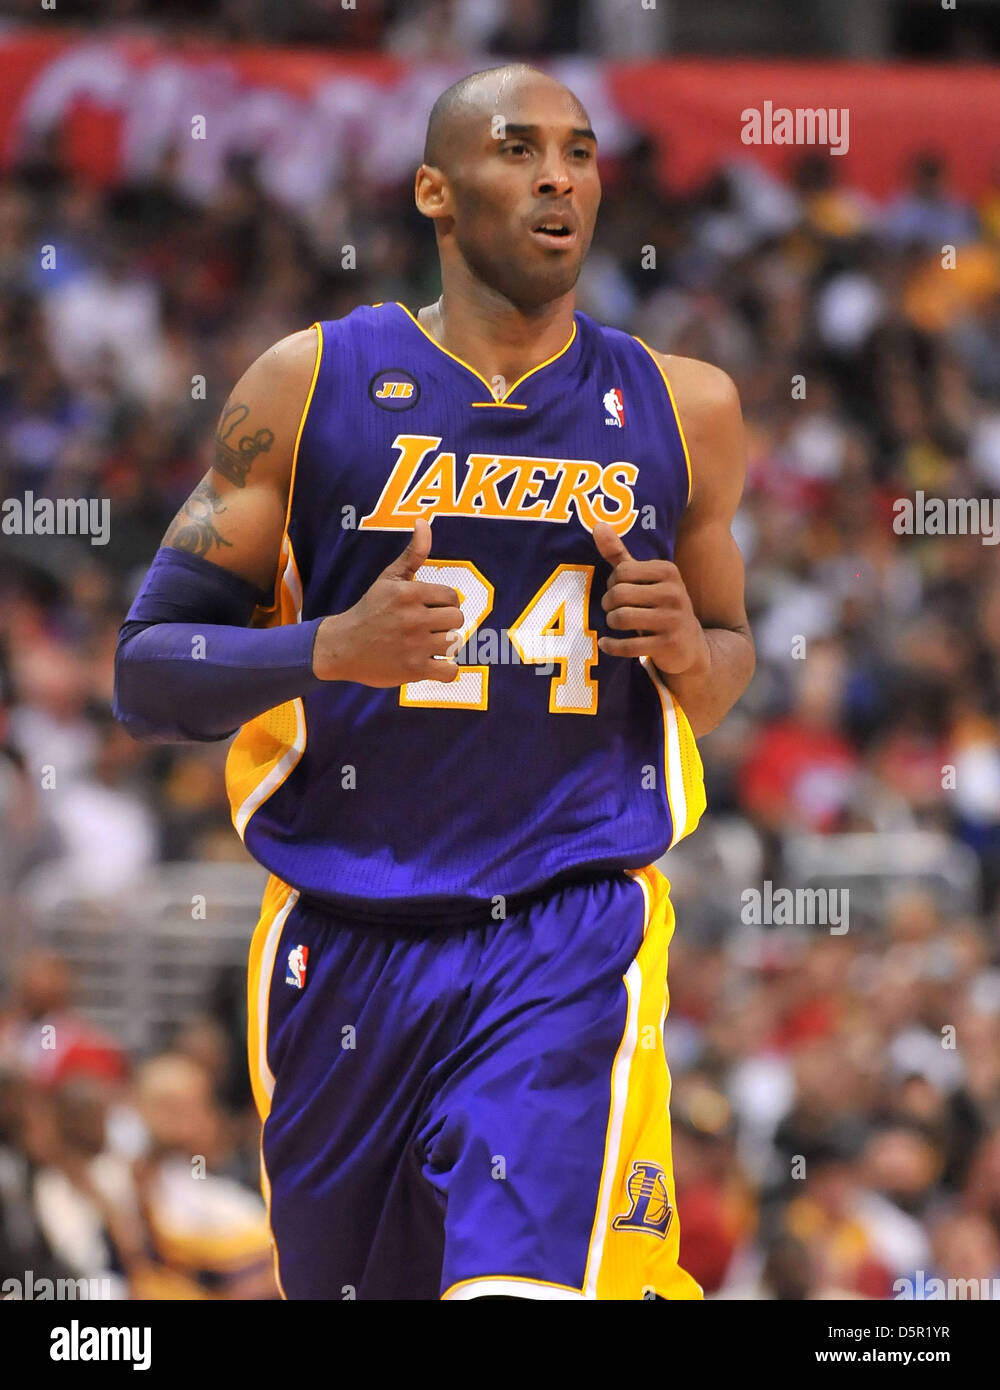 MY Ready Stock] Kobe Bryant #24 Los Angeles Lakers WHITE Home Away NBA  Basketball Jersey Singlet